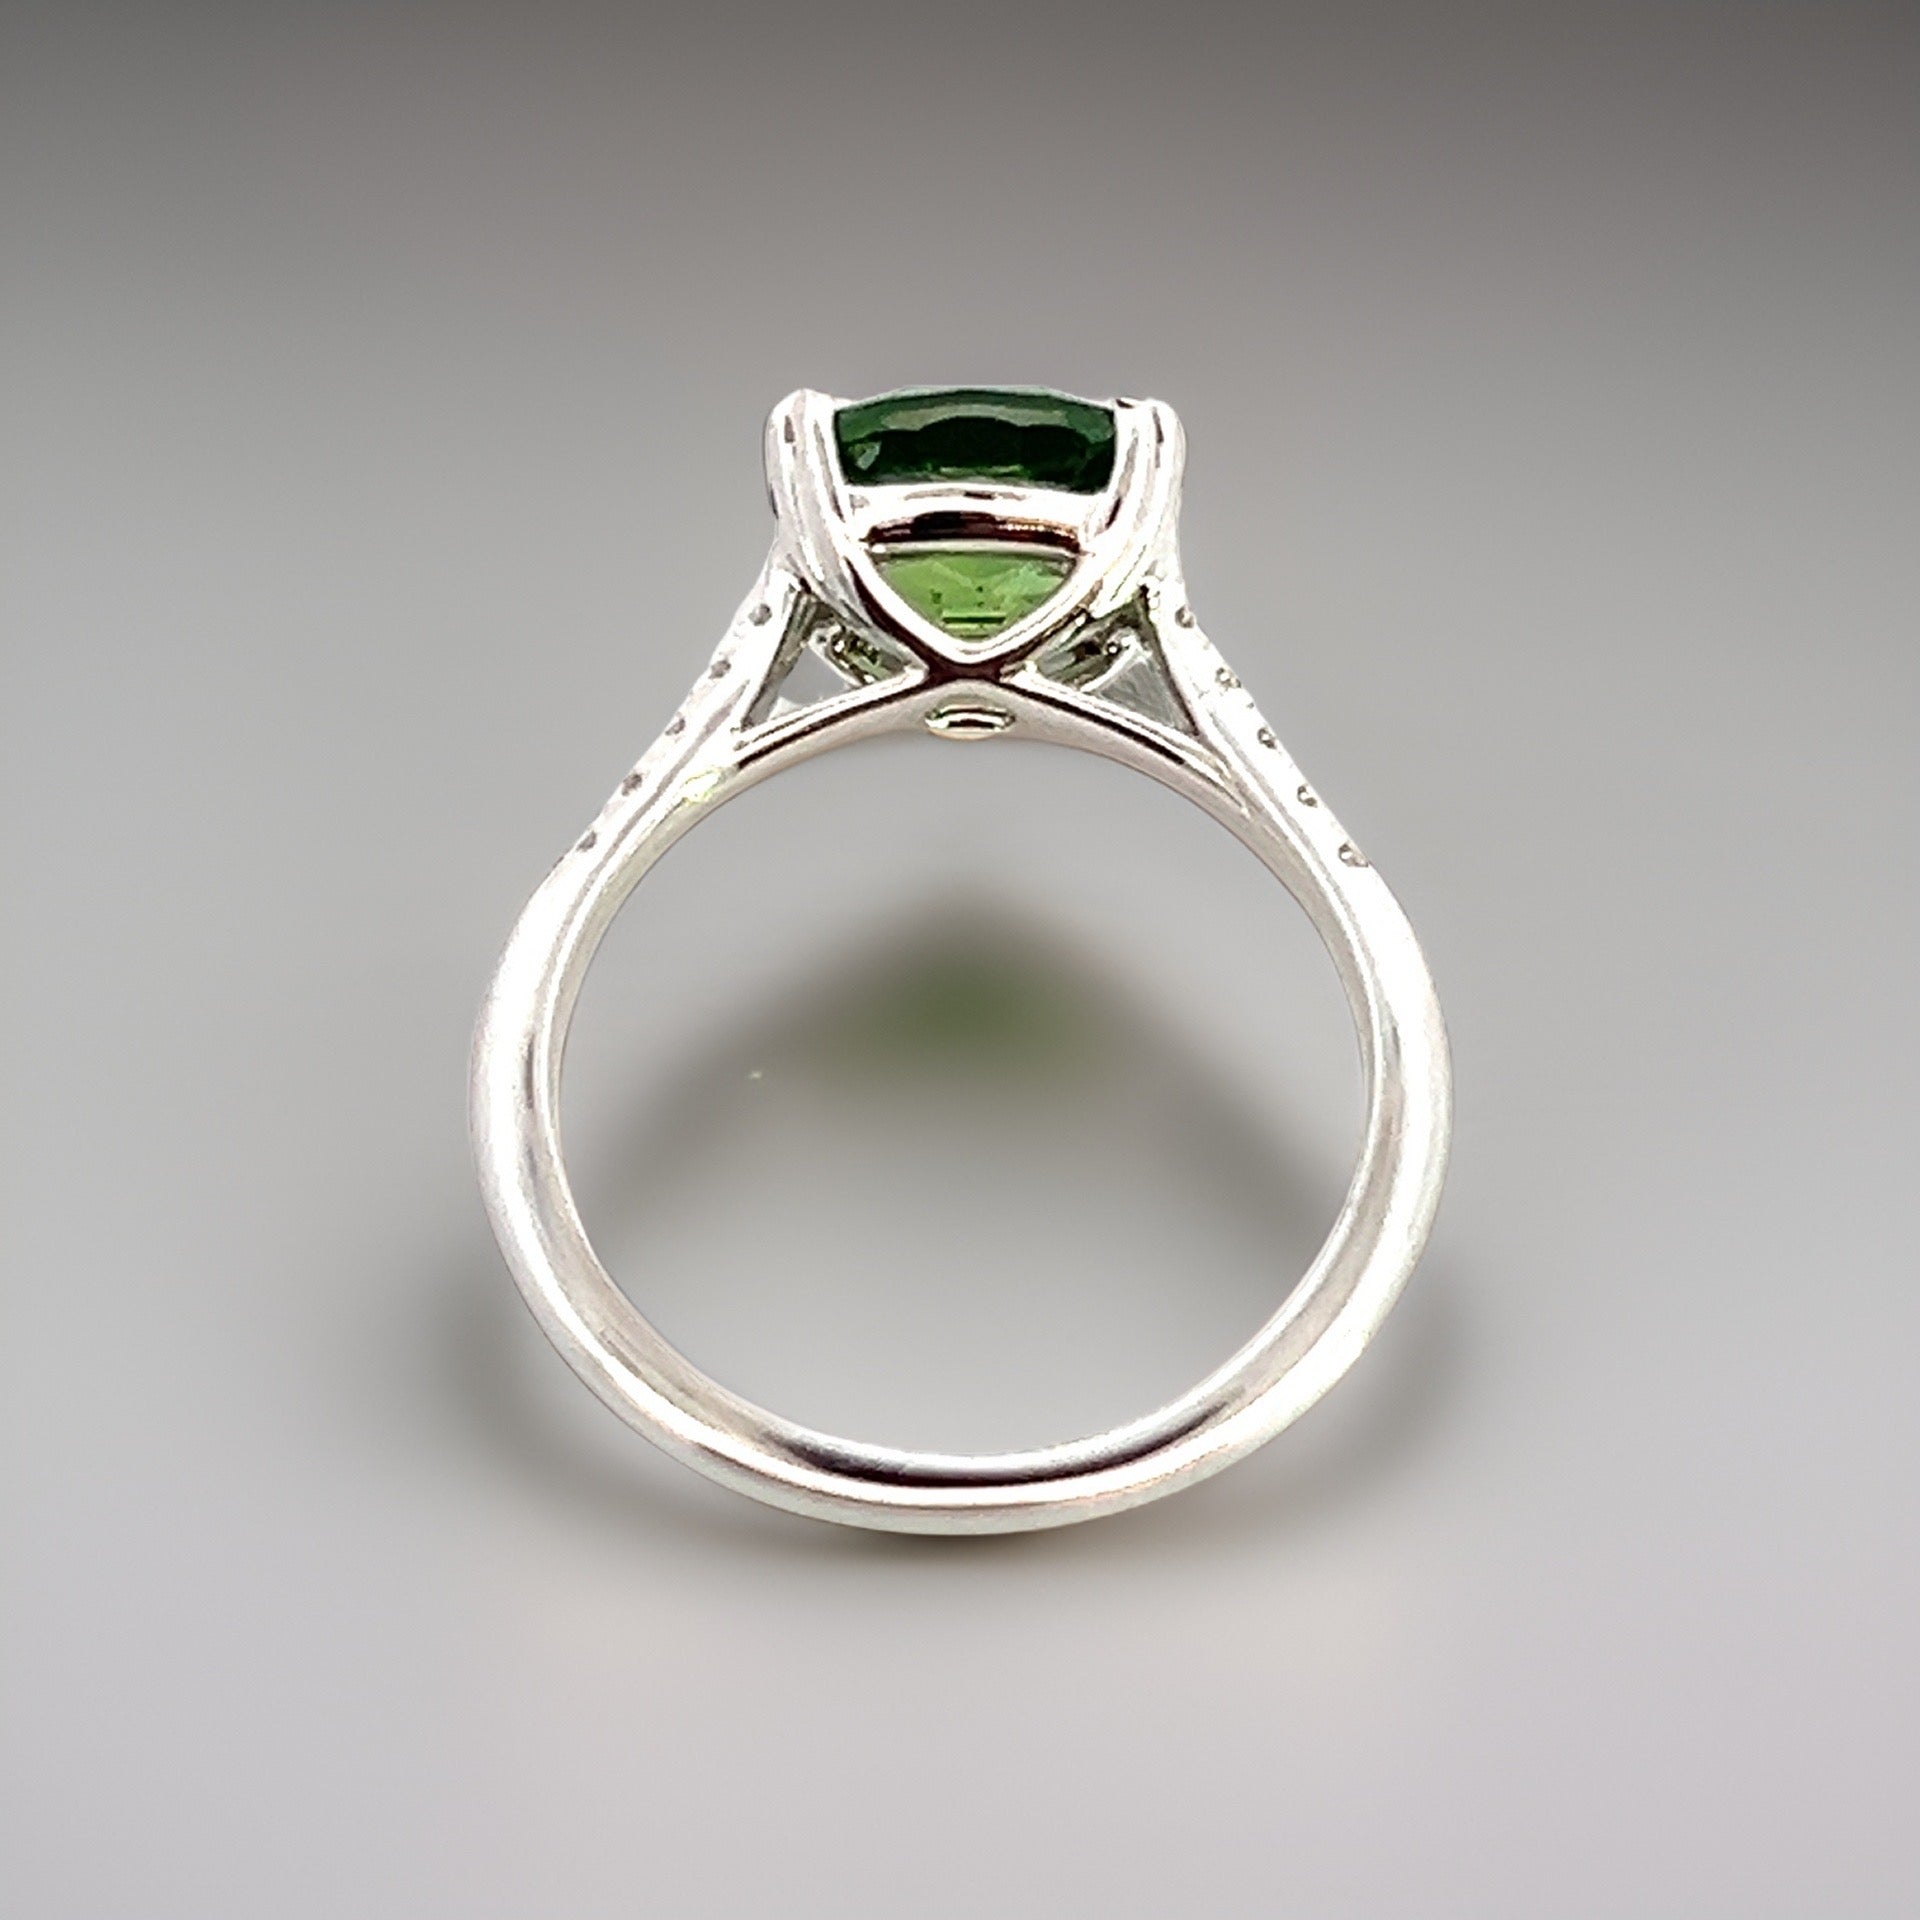 Natural Sapphire Diamond Ring 6.5 14k WG 2.89 TCW Certified $4,950 310999 - Certified Fine Jewelry